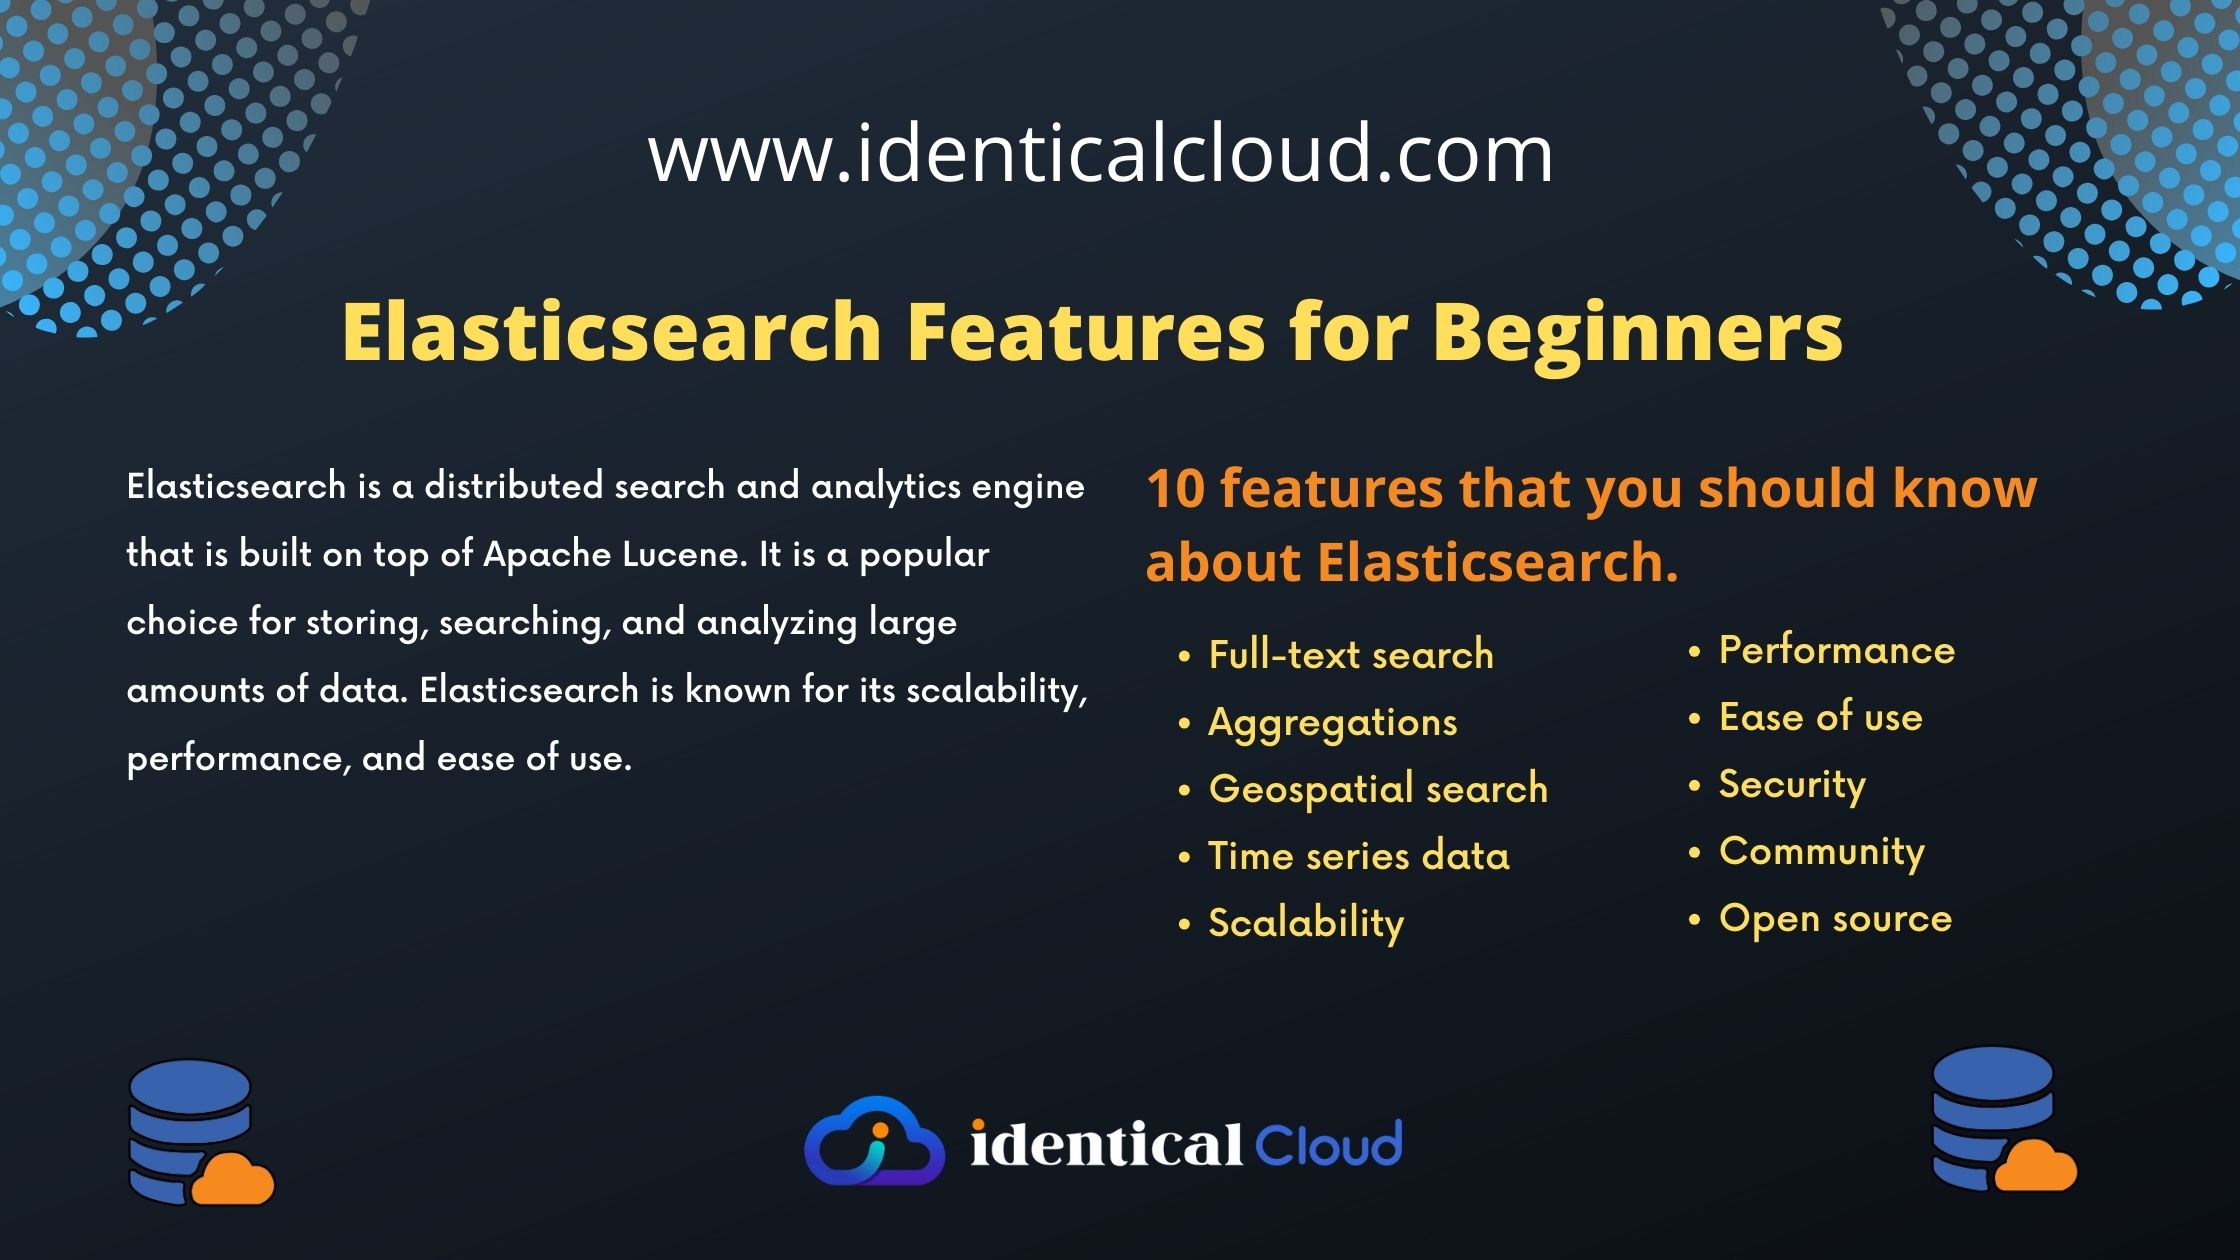 Elasticsearch Features for Beginners - identicalcloud.com